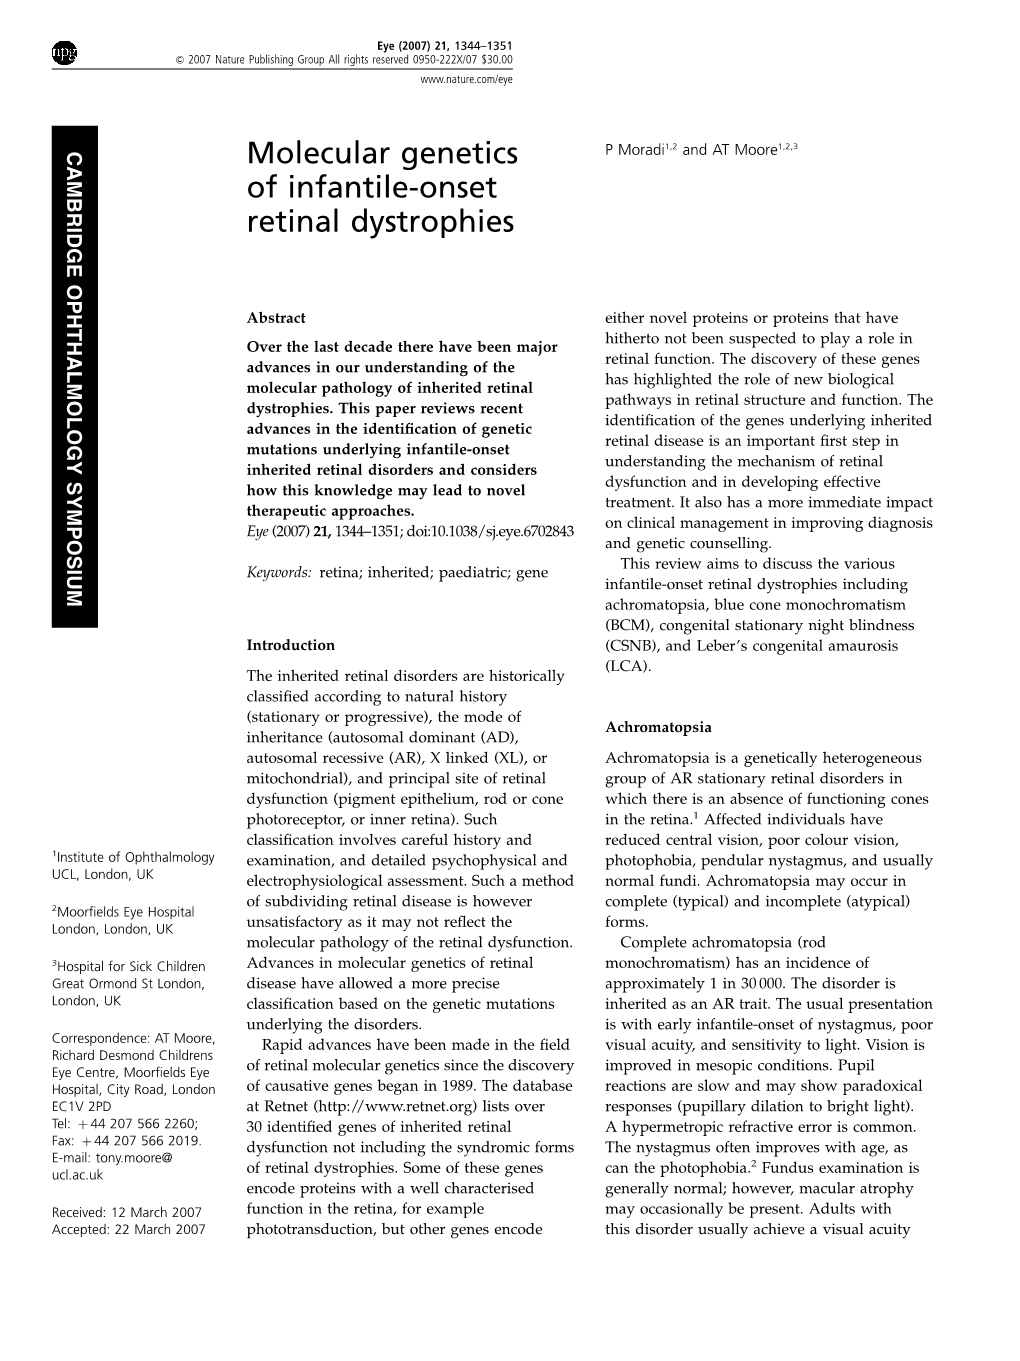 Molecular Genetics of Infantile-Onset Retinal Dystrophies